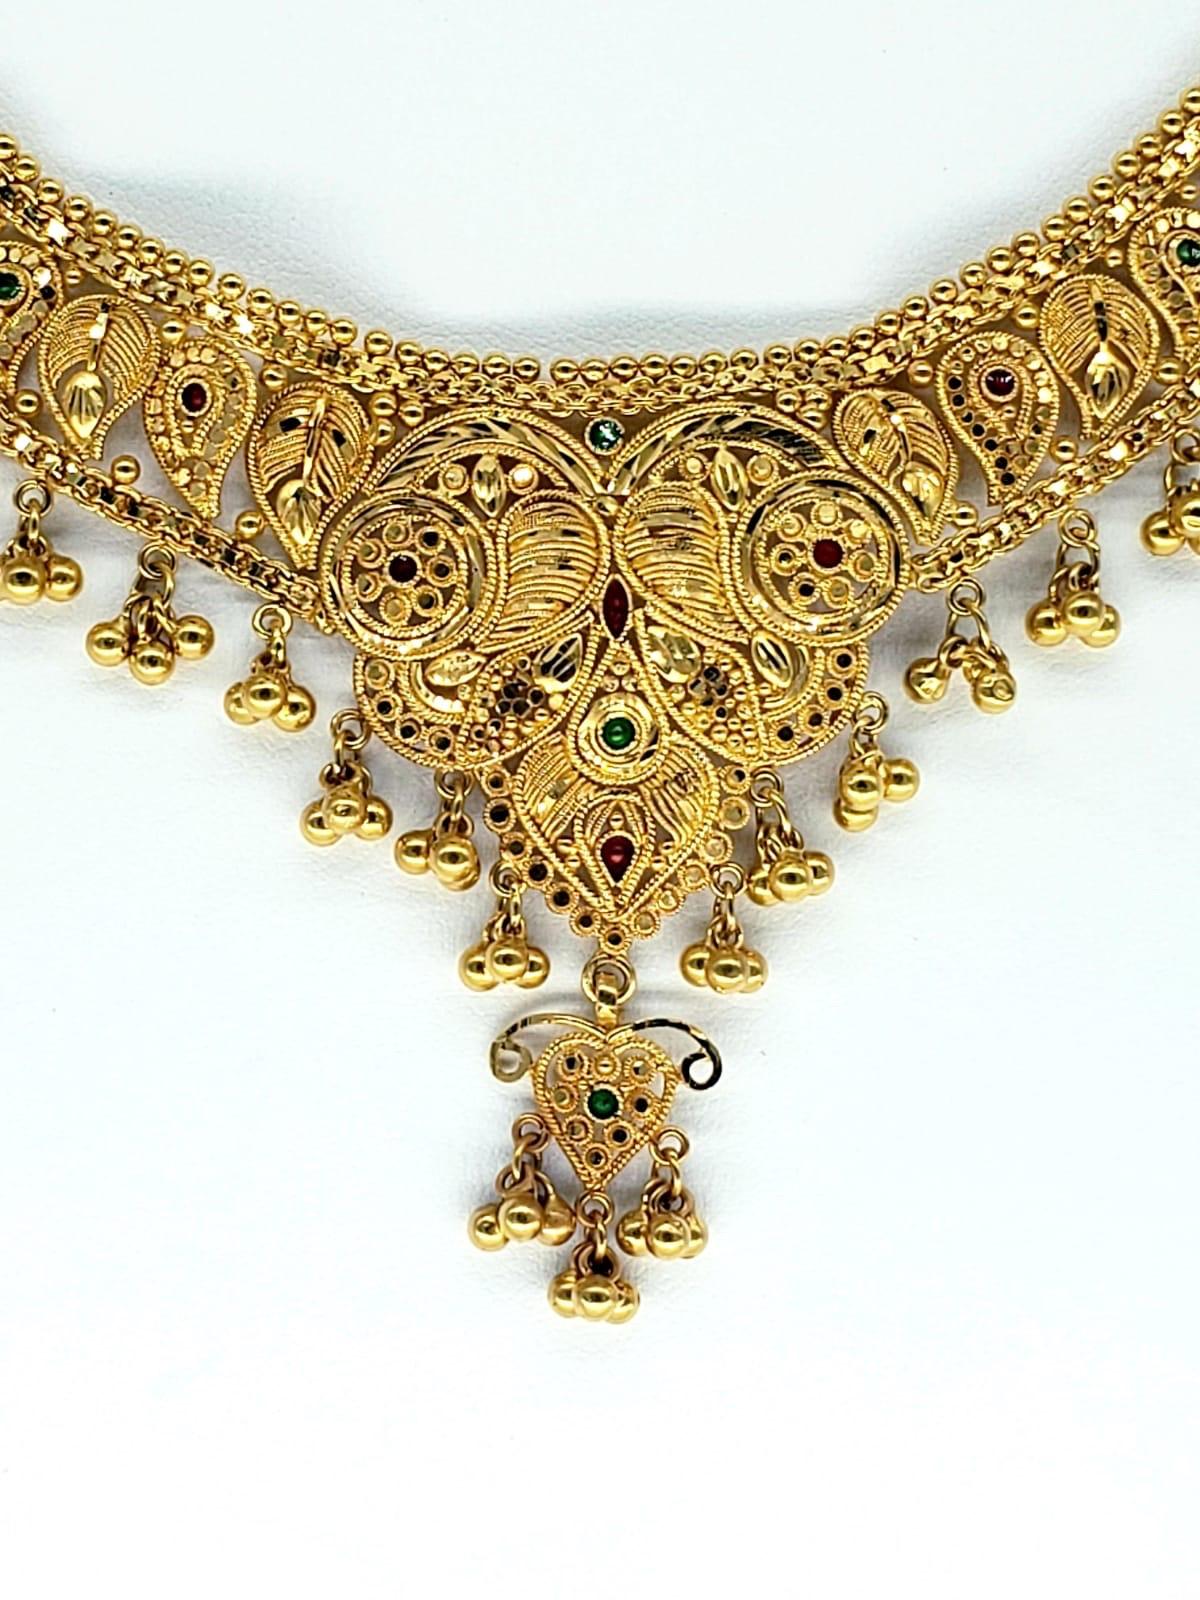 wedding 22 k solid gold filigree necklace choker pendant